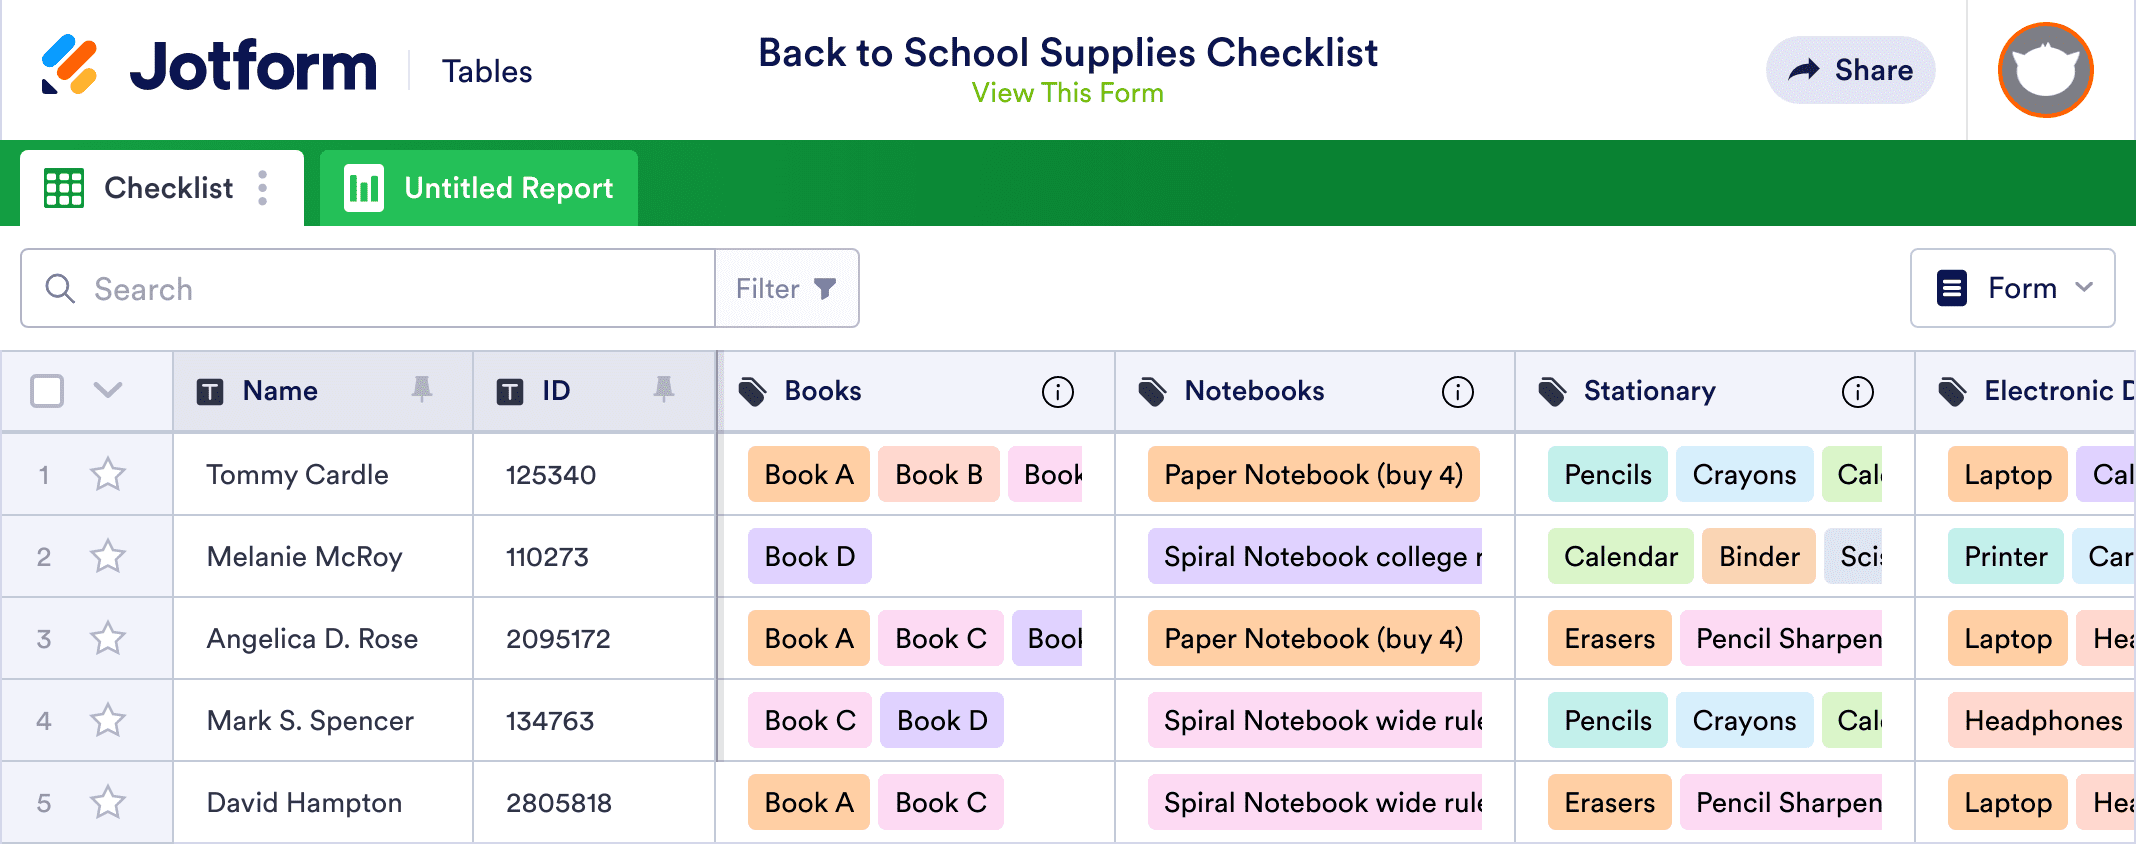 Back to School Supplies Checklist